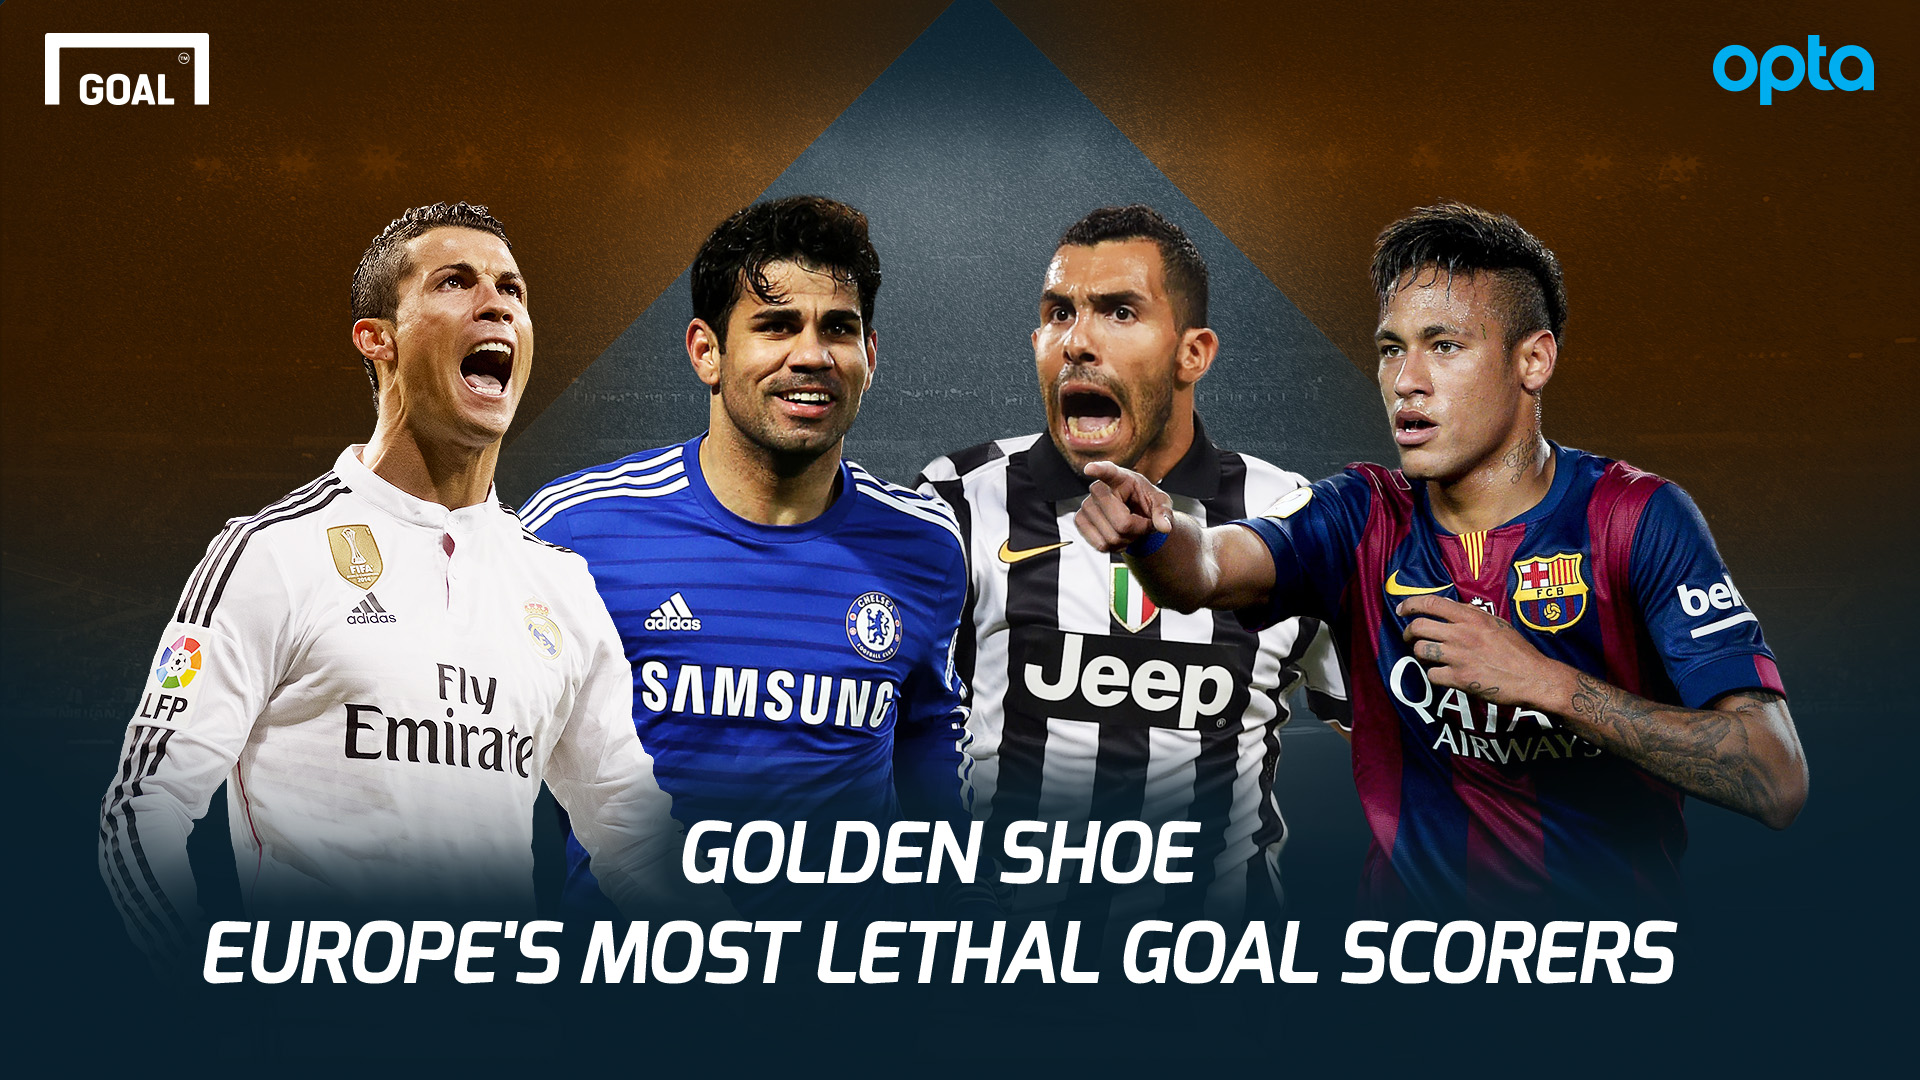 Golden Shoe Europe's Top Goal Scorers